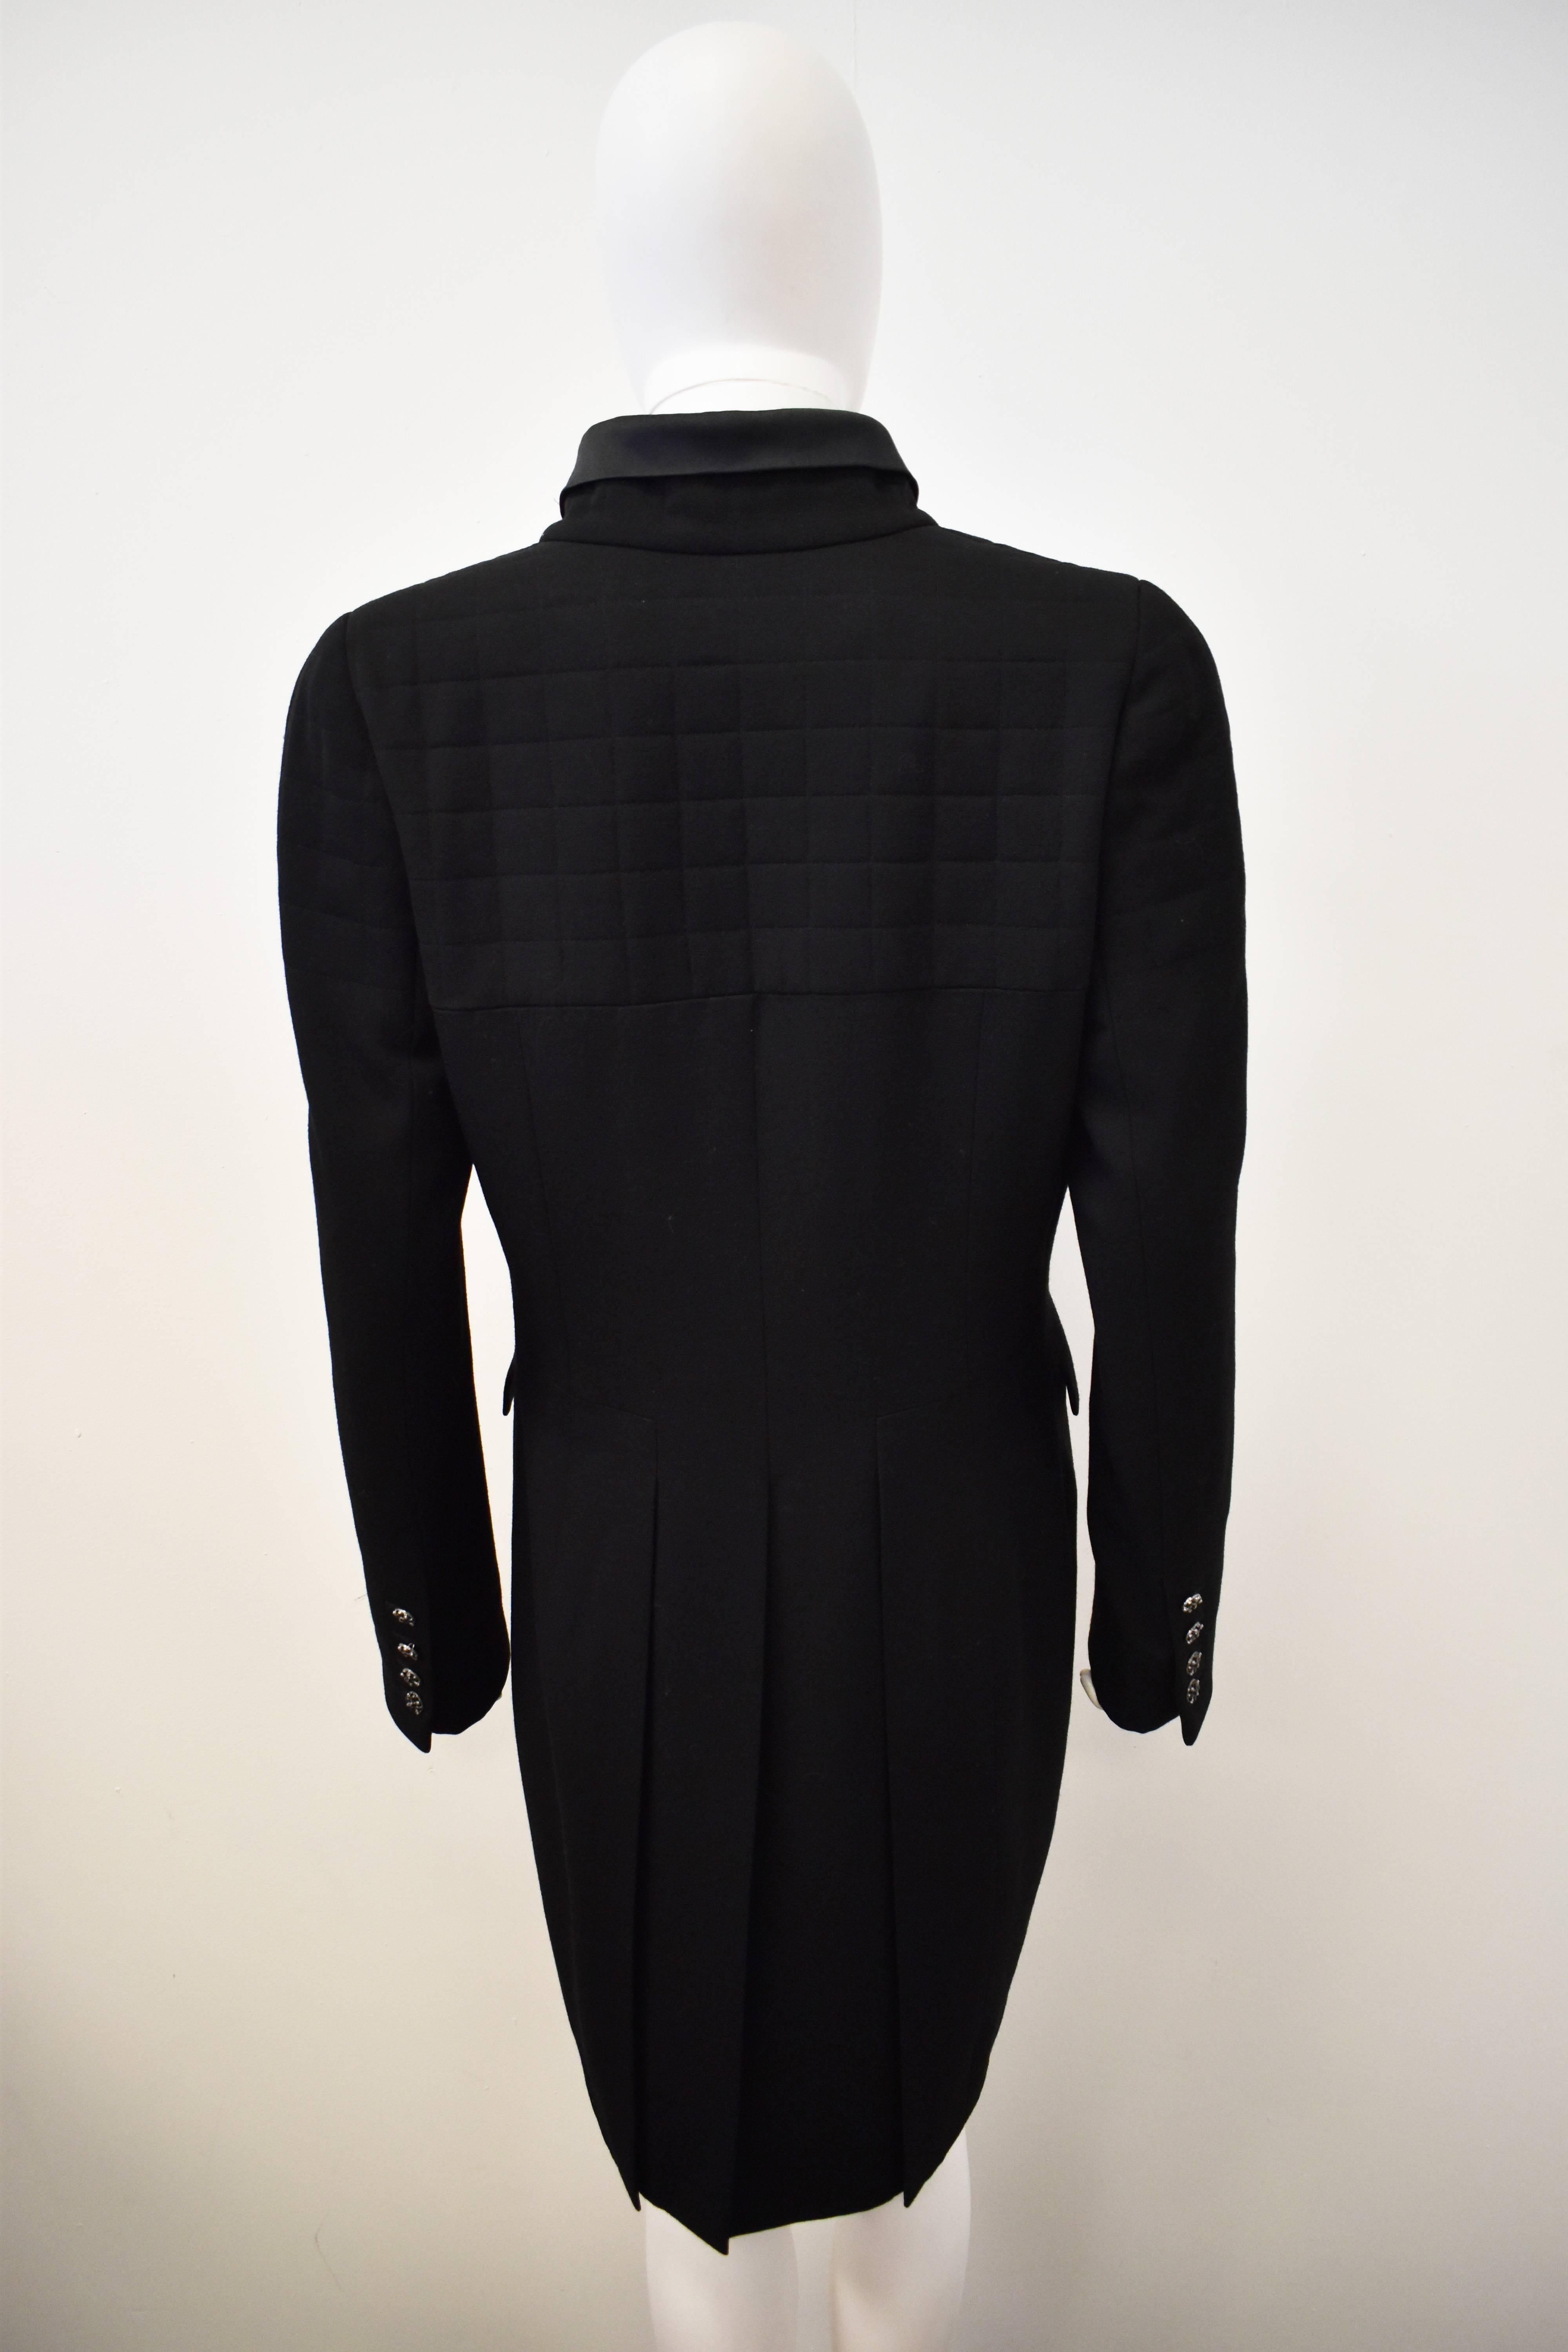 Chanel Black Tuxedo Coat 2006 For Sale 2